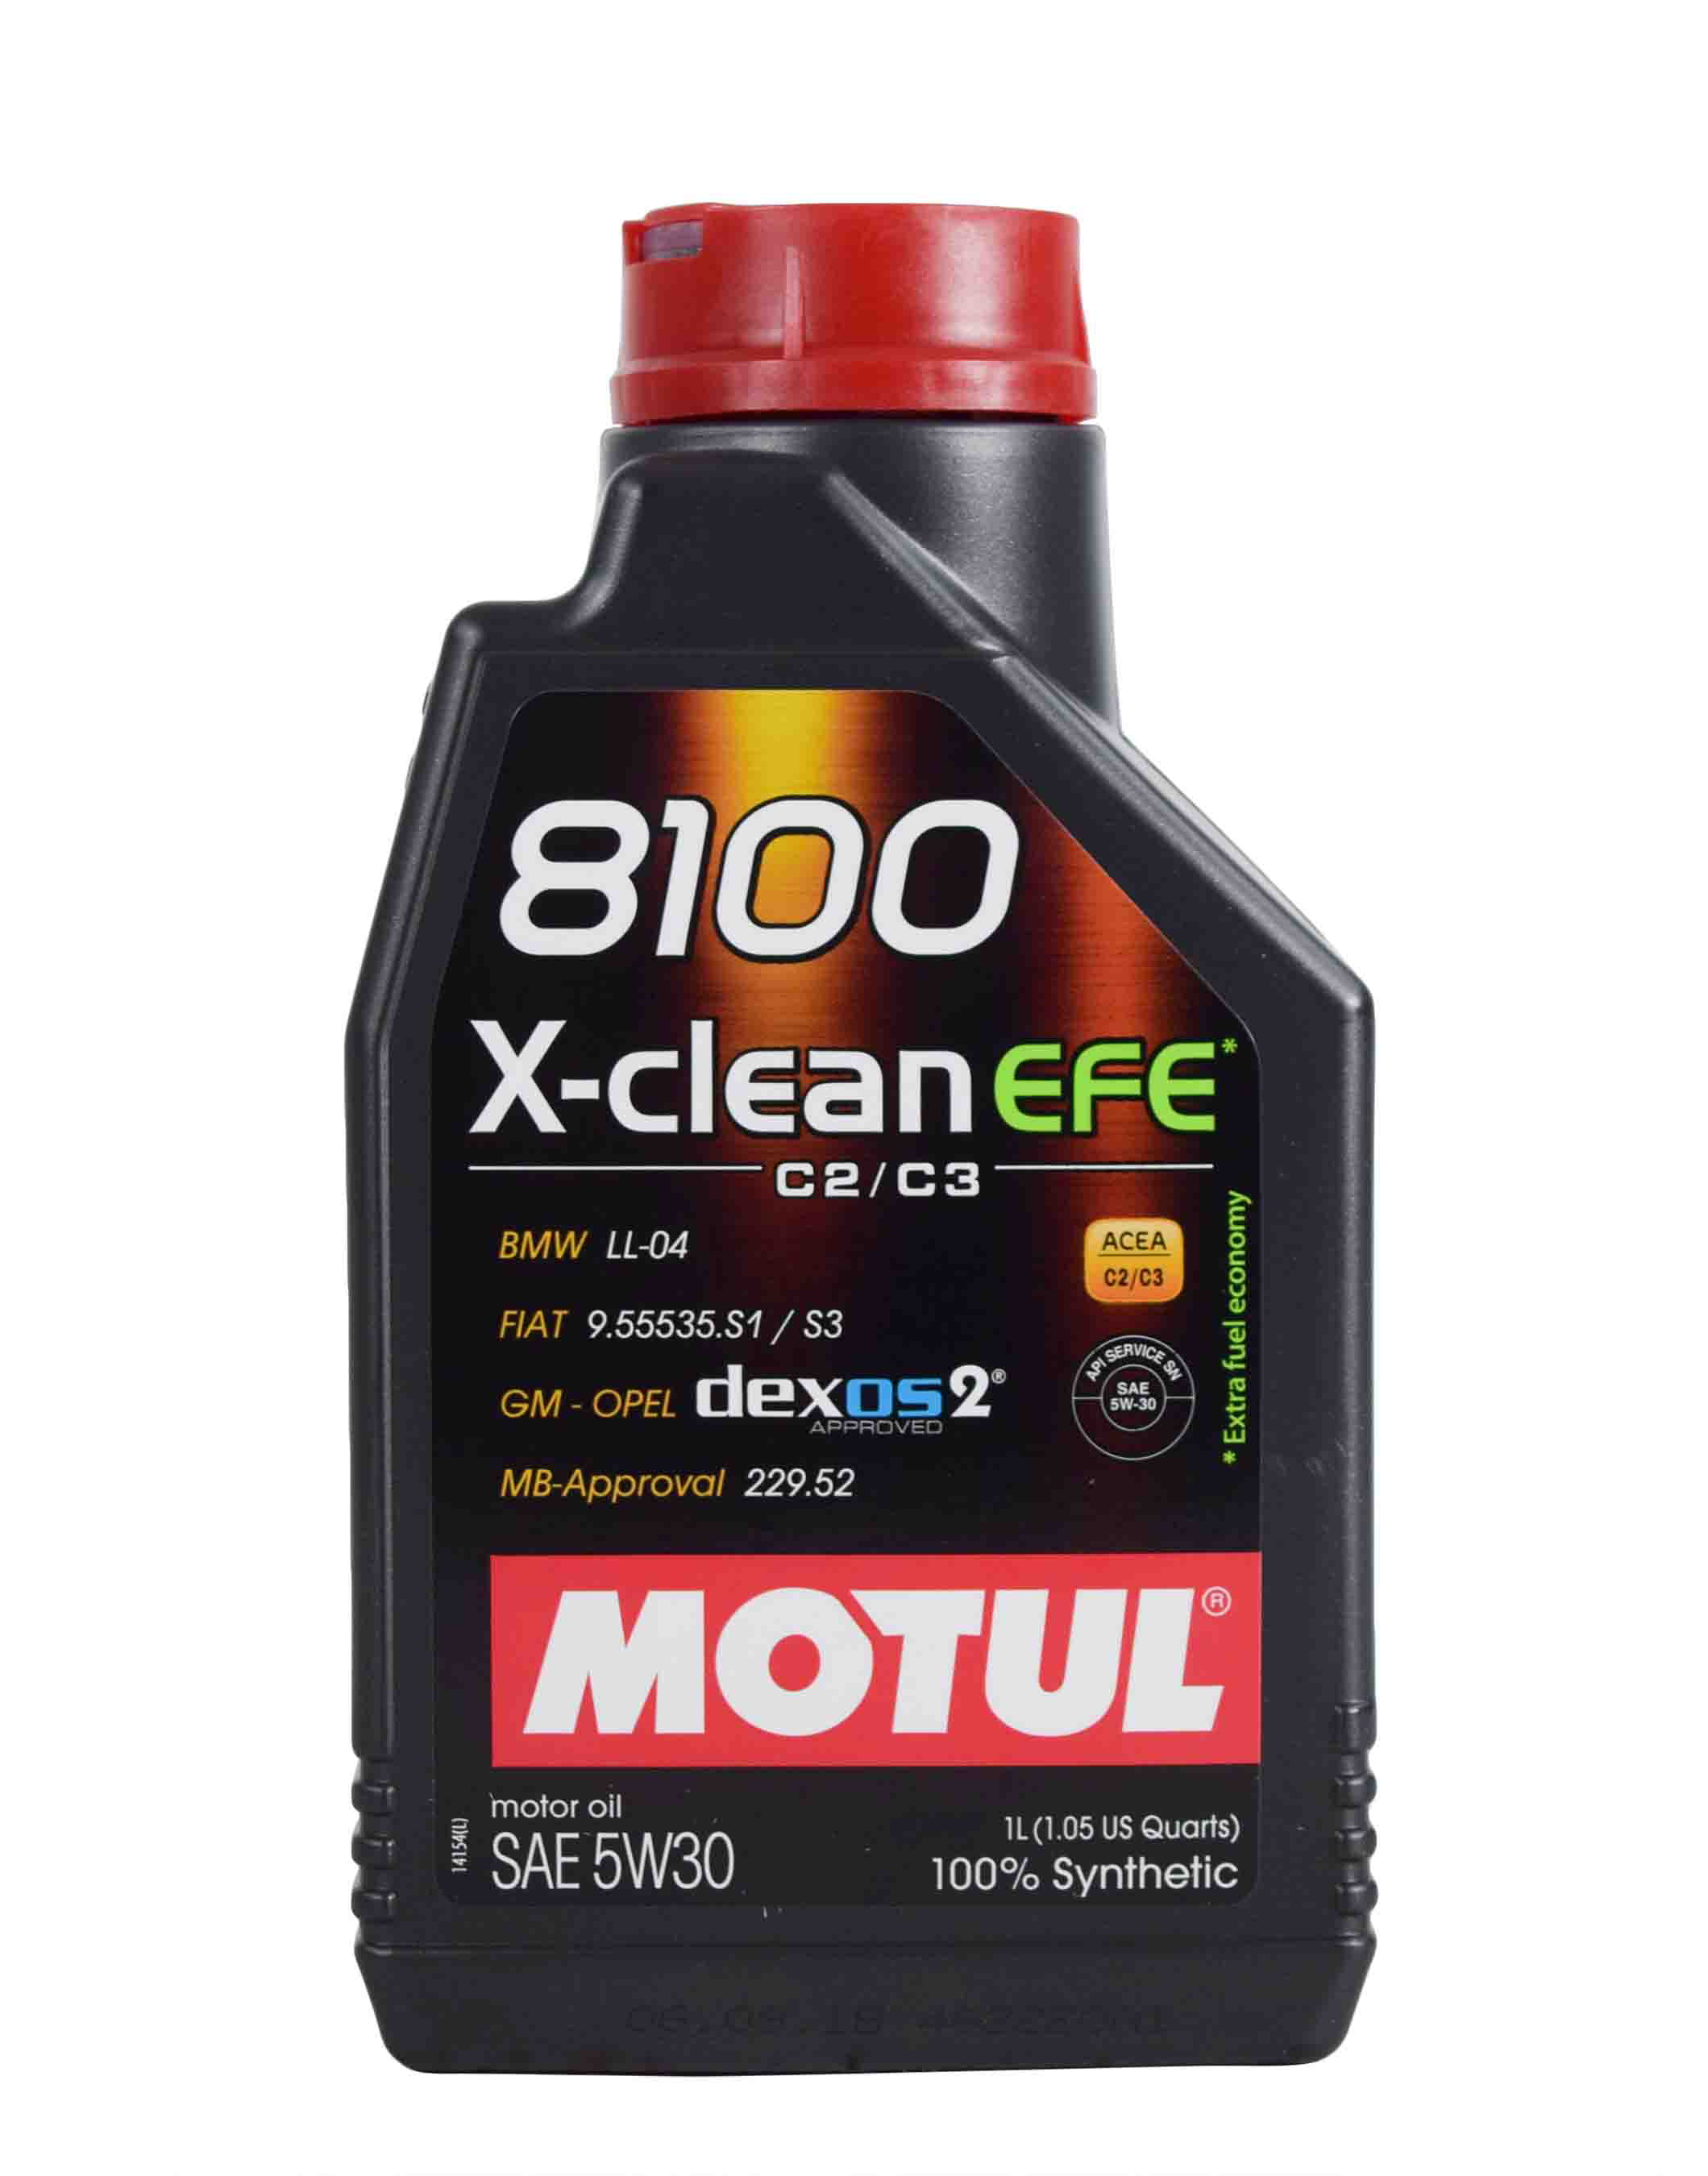 Motul 8100 -Clean EFE 100% Synthetic SAE 5W30 Motor Oil 5W-30 1 Liter .